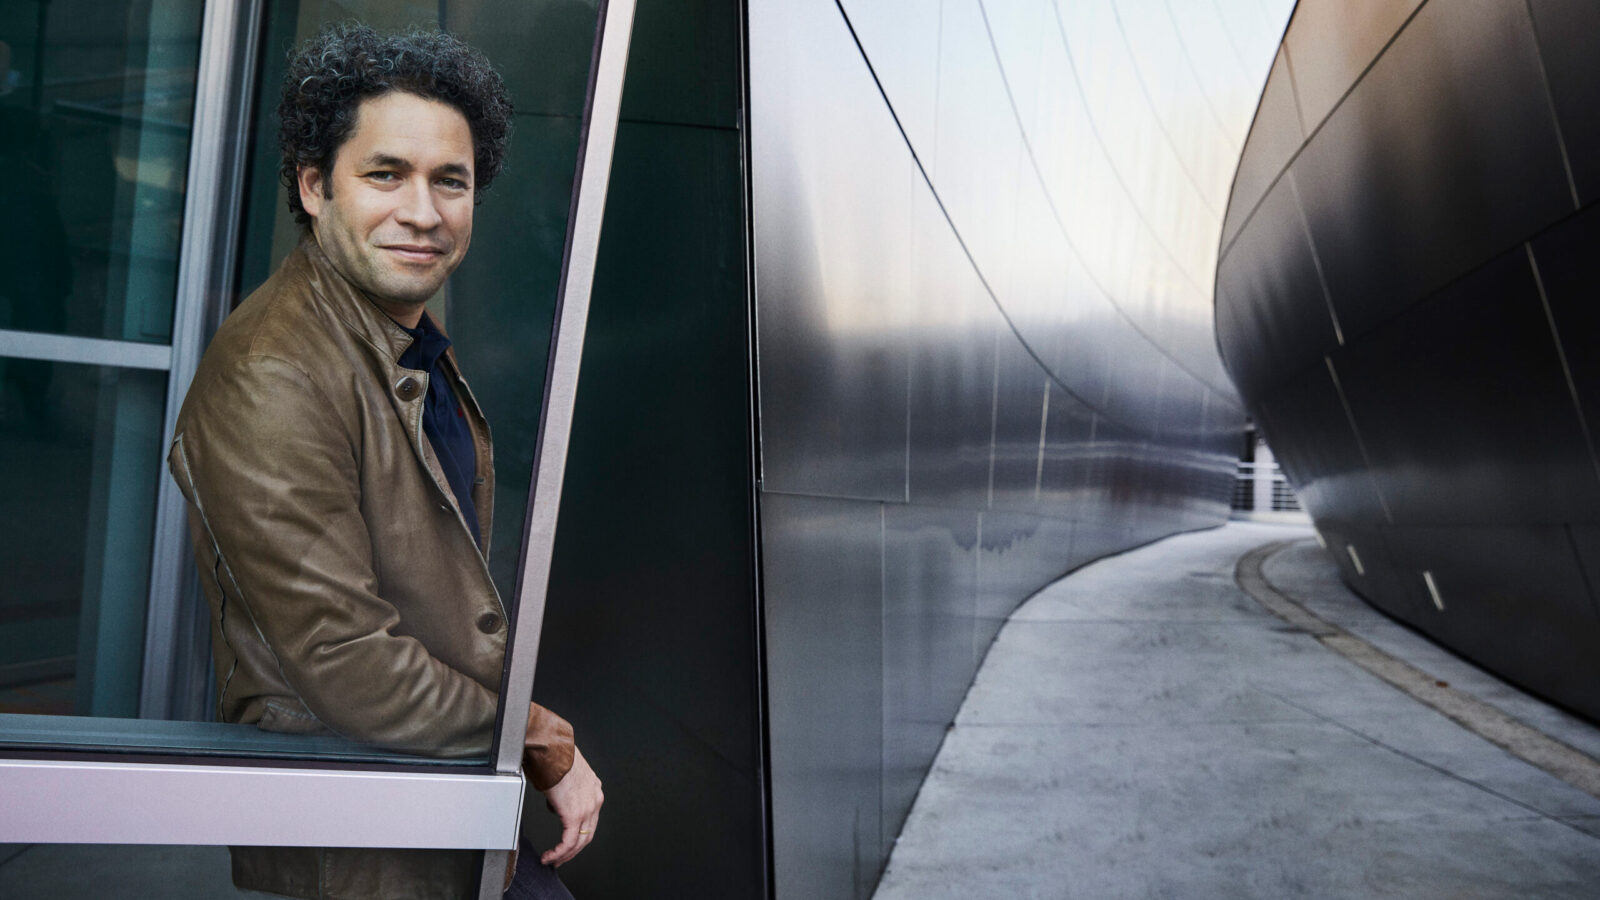 Gustavo Dudamel announced as music director of New York Philharmonic